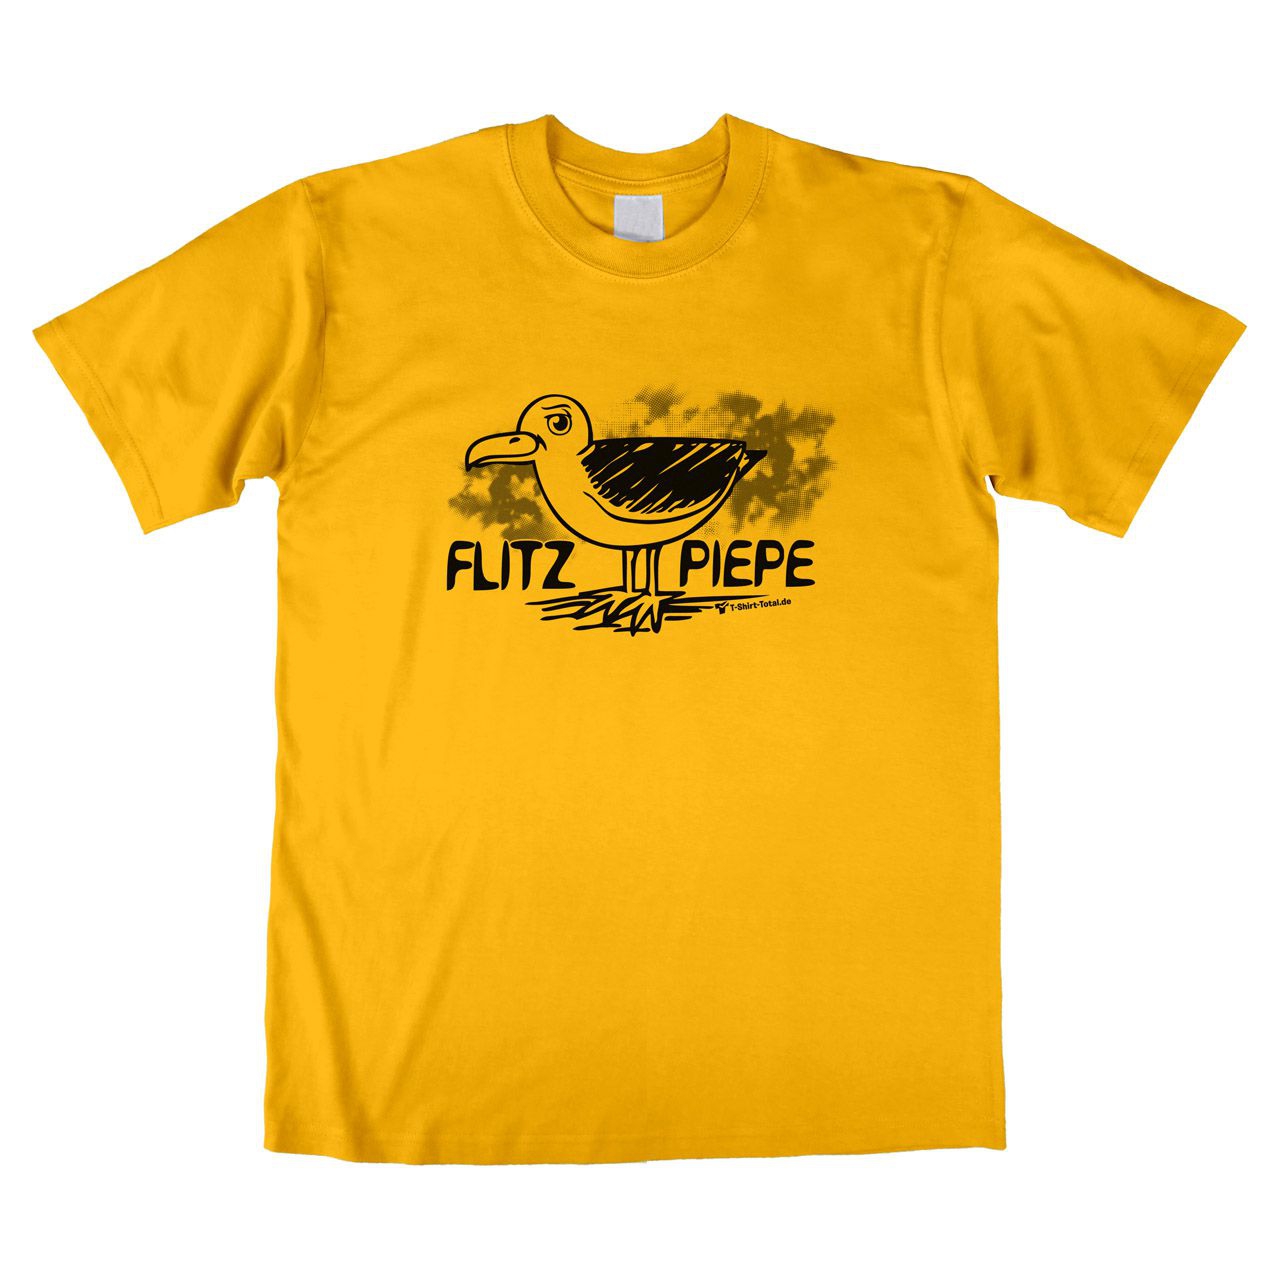 Flitzpiepe Unisex T-Shirt gelb Medium